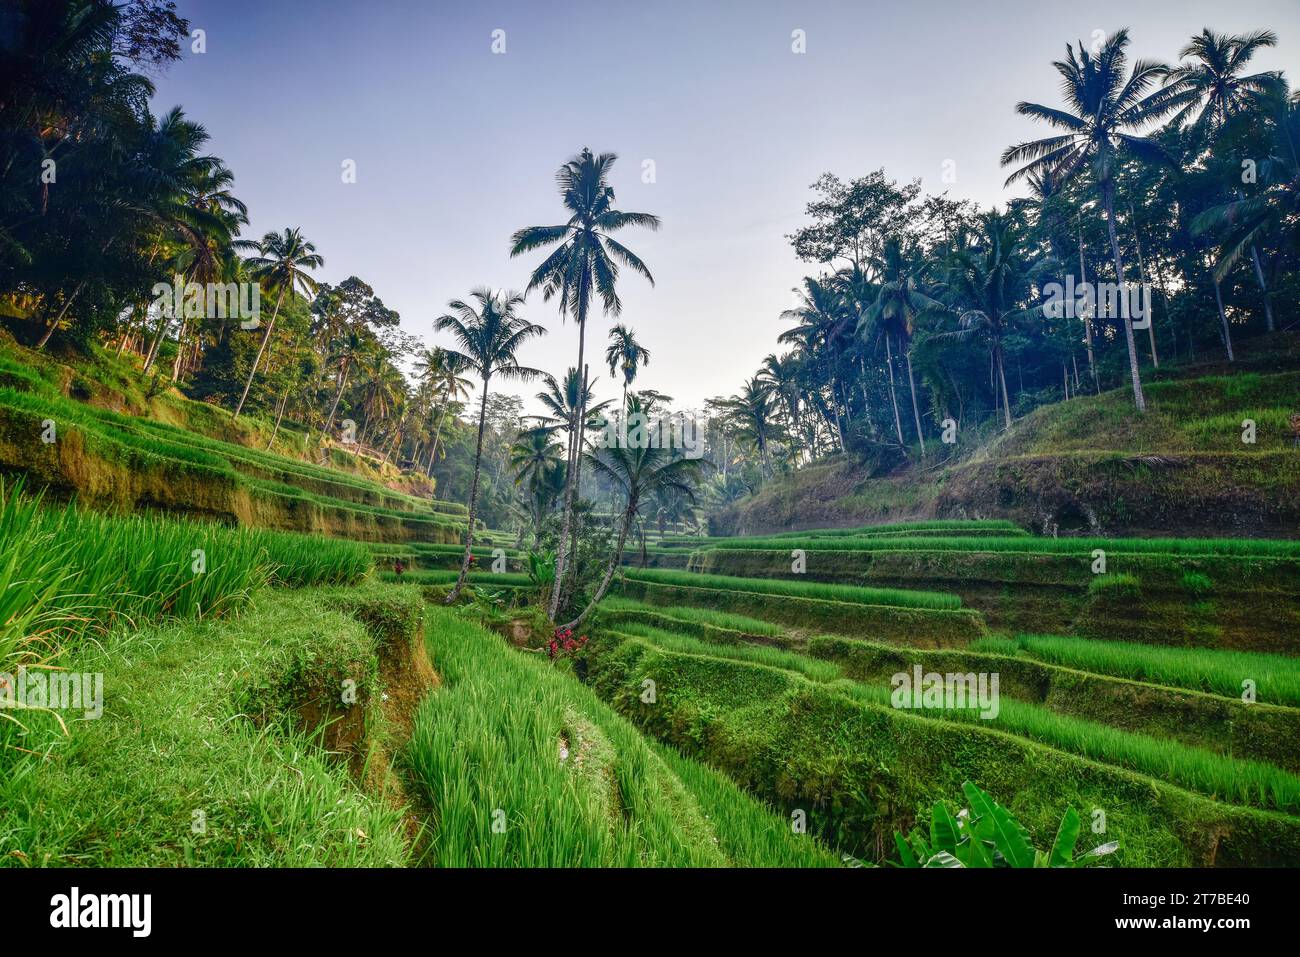 Palmen in einem Reisterrassen, Tegallalang, Gianyar Regency, Bali, Indonesien Stockfoto